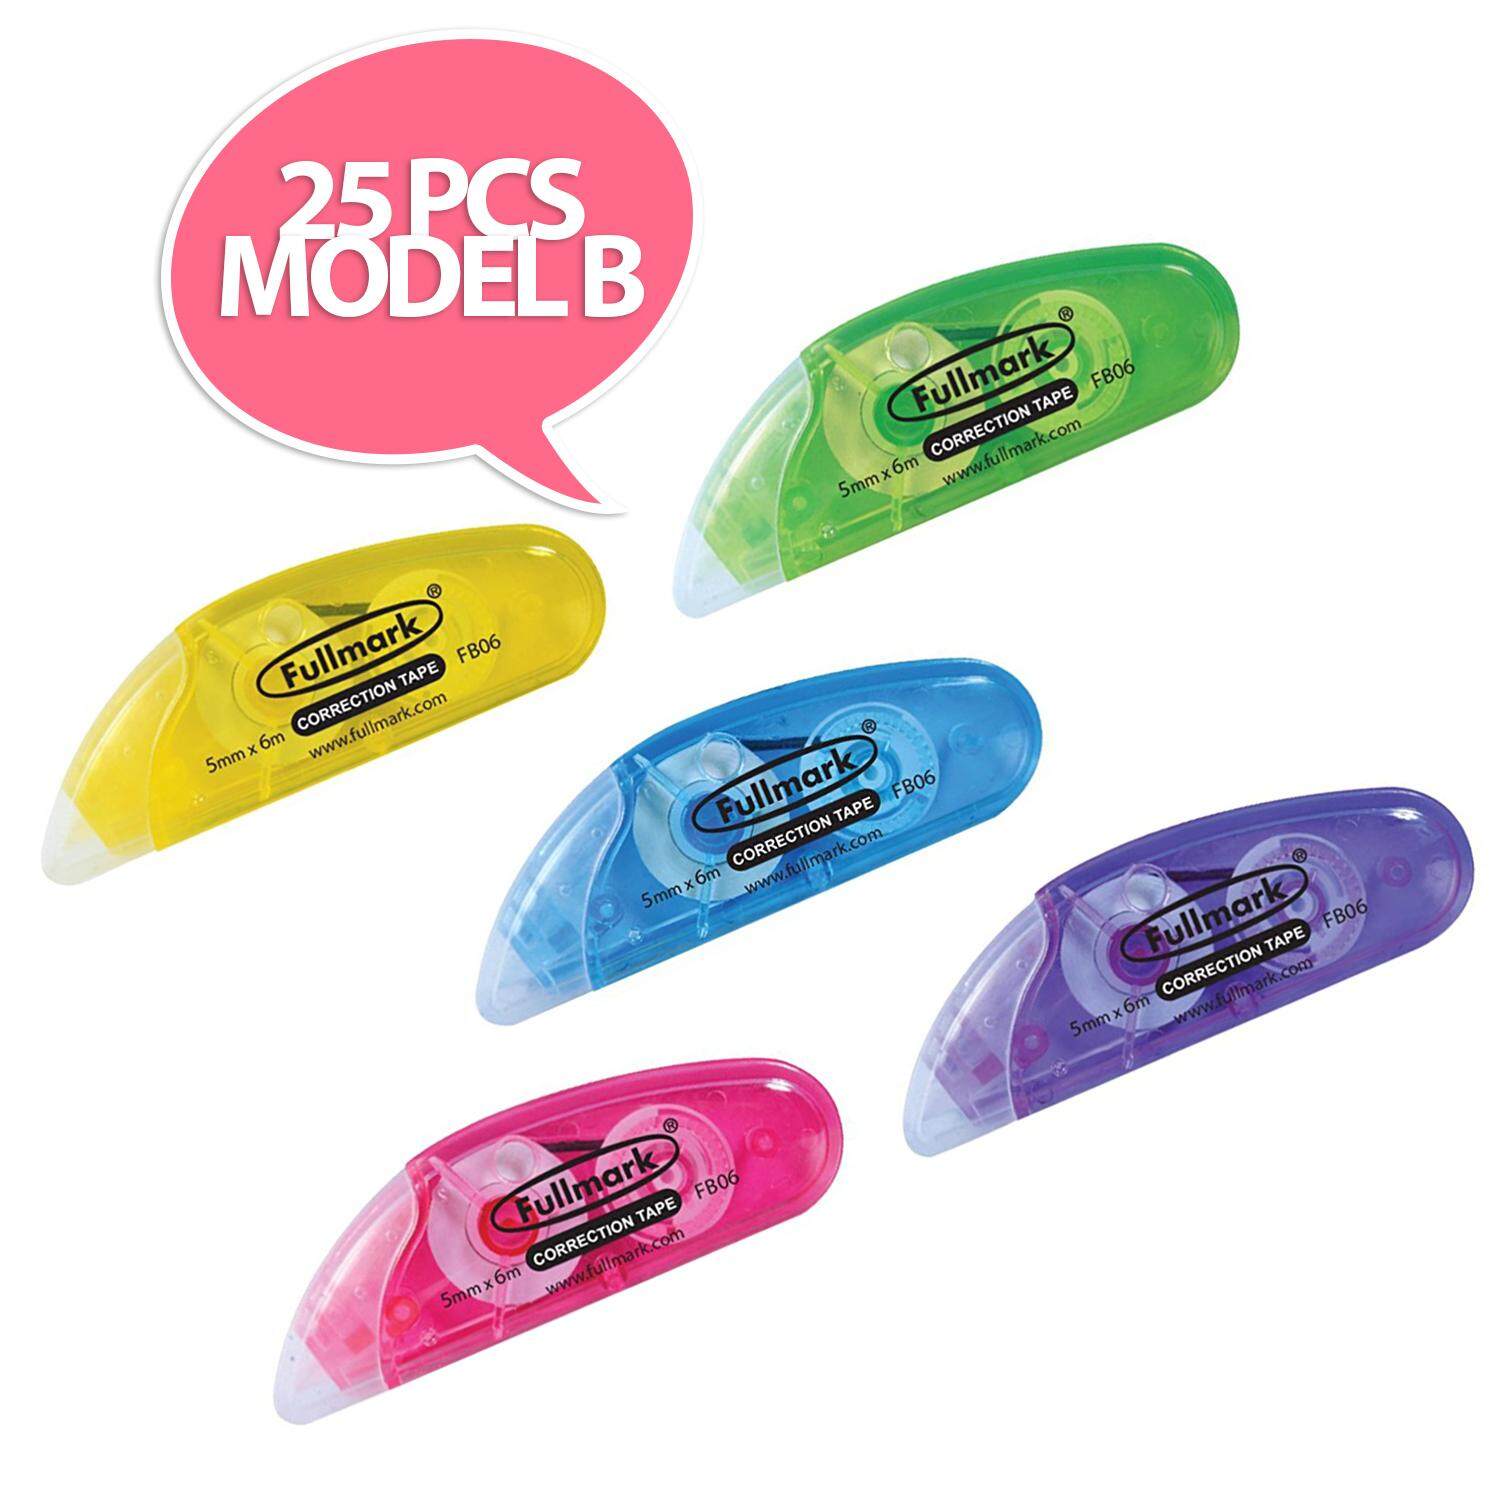 Fullmark Correction Tape , 50 pcs / pack (10 x Pink, 10 x Yellow, 10 x Green, 10 x Blue, 10 x Purple) (Model B + Model D)